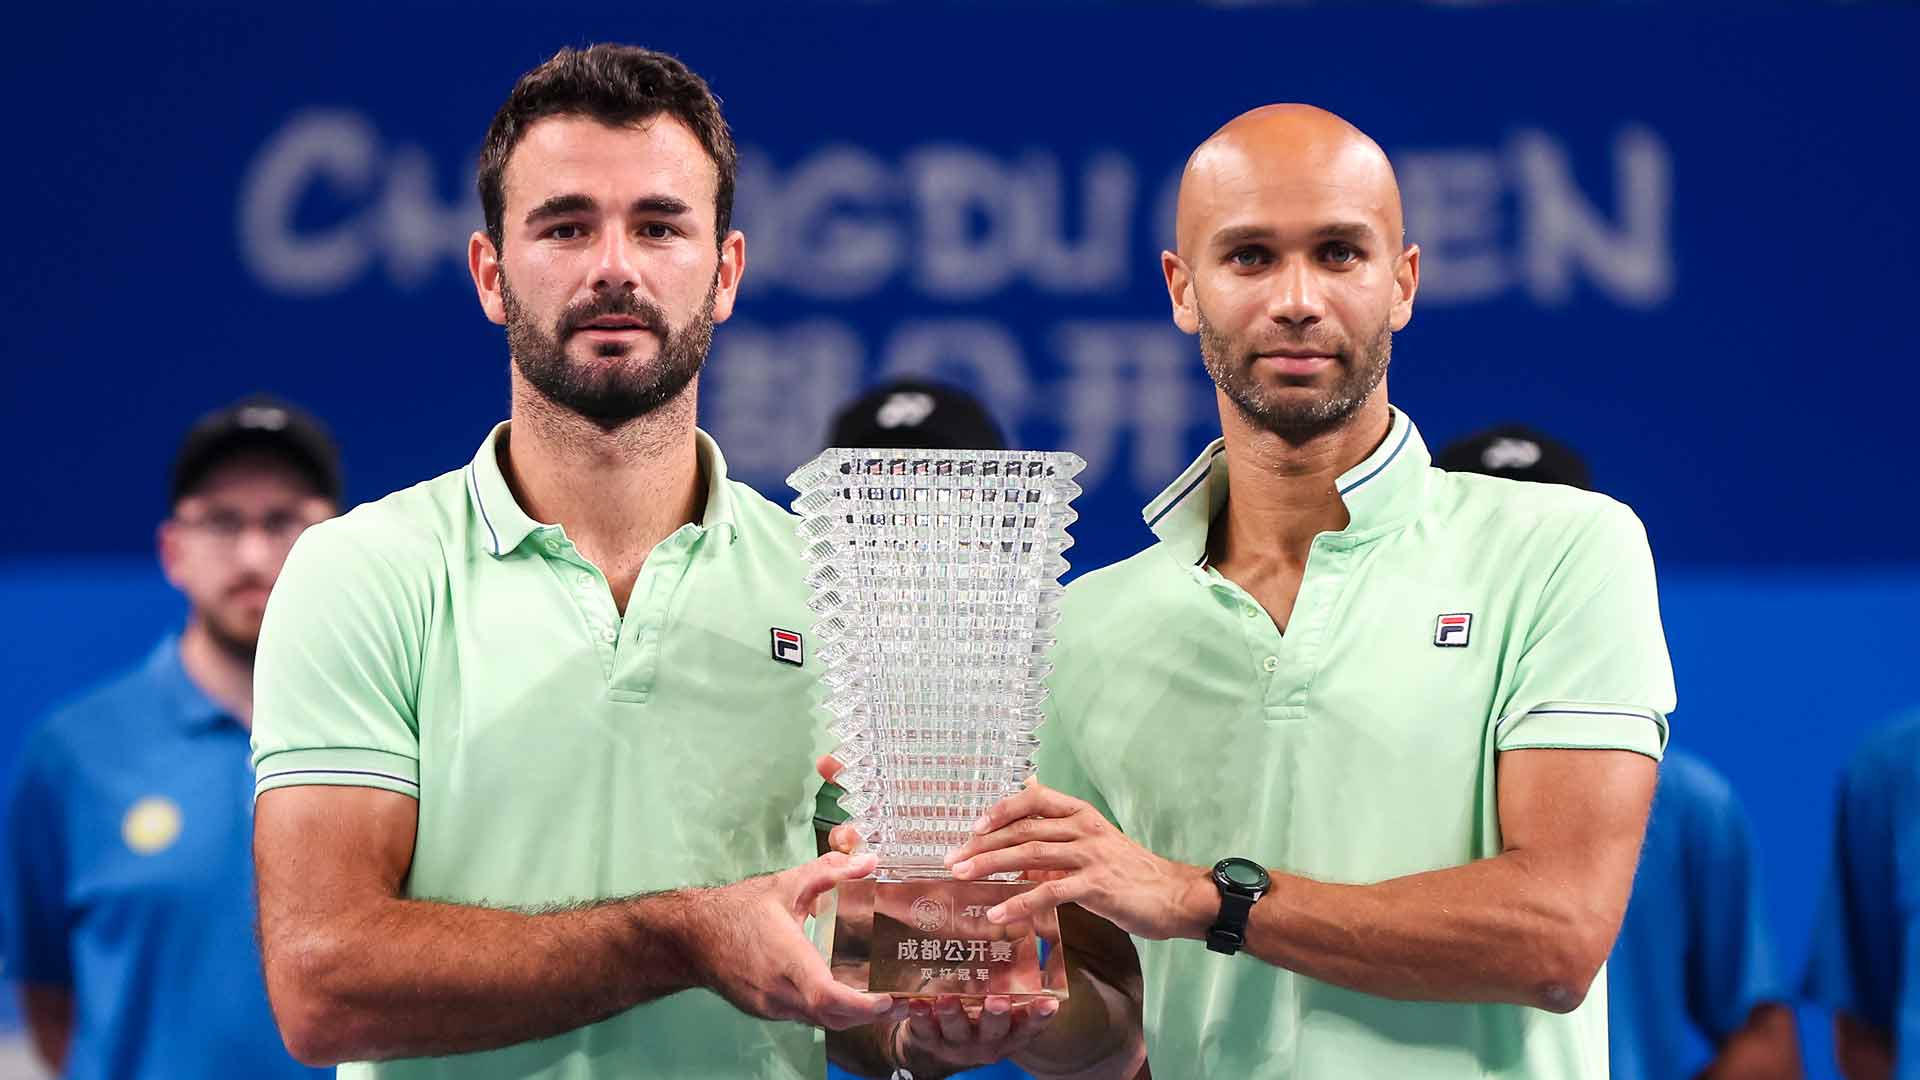 Fabien Reboul and Sadio Doumbia claim their maiden ATP Tour title on Tuesday at the Chengdu Open.